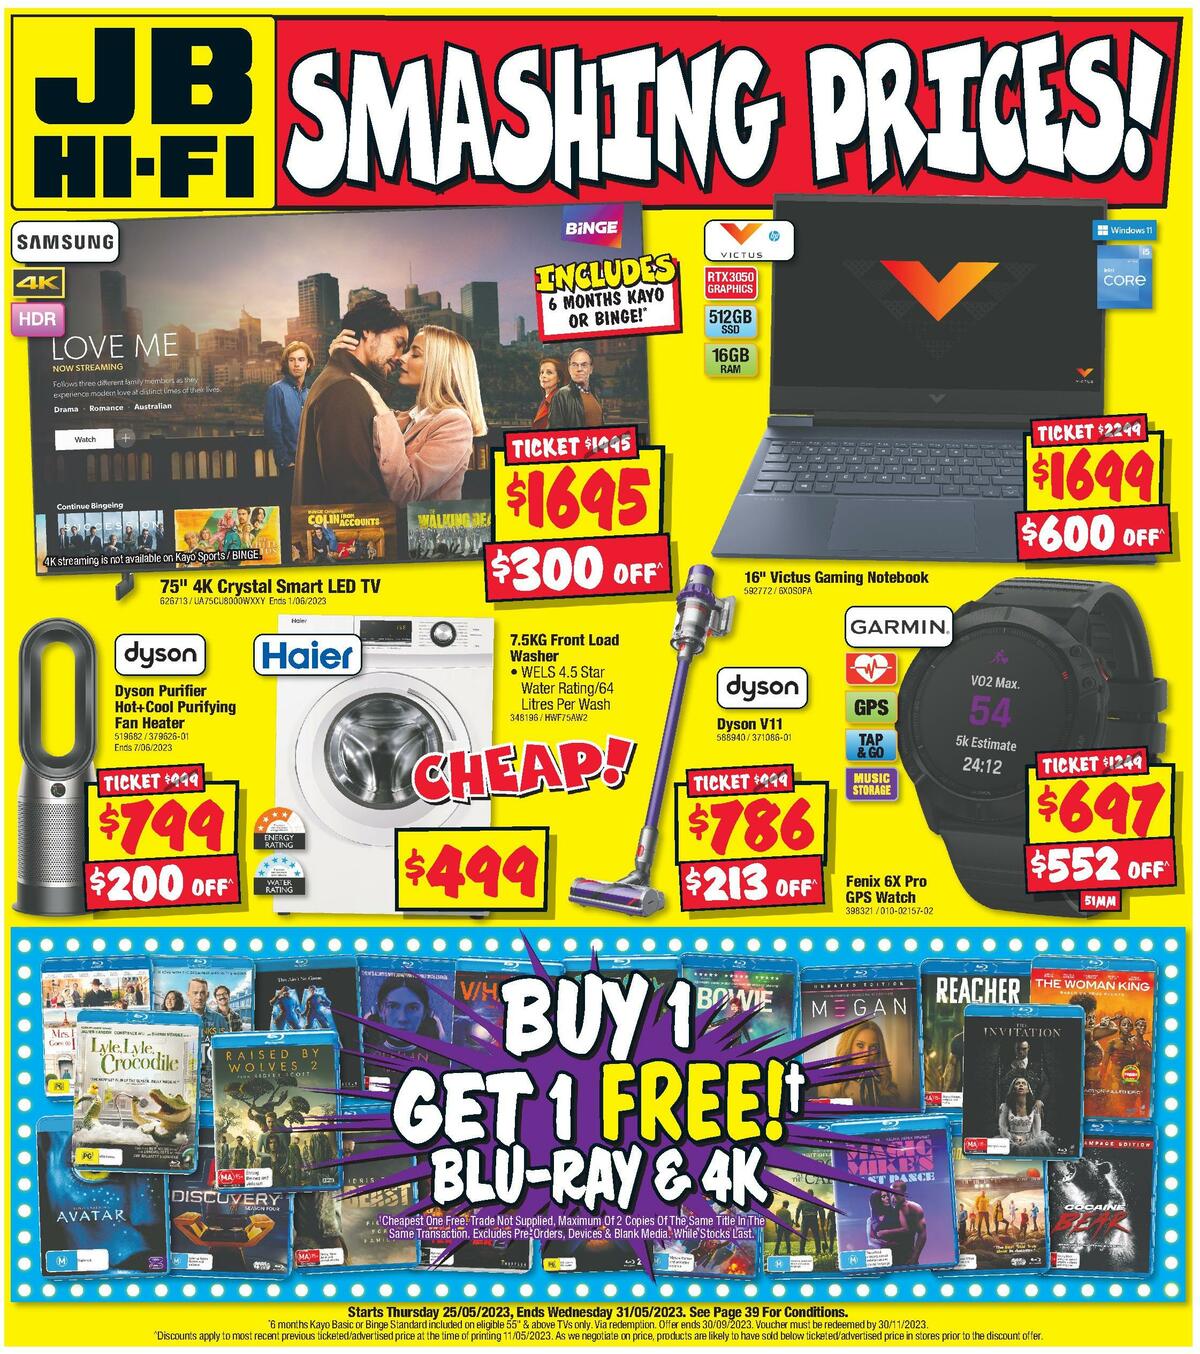 JB Hi-Fi Smashing Prices Catalogues from 25 May